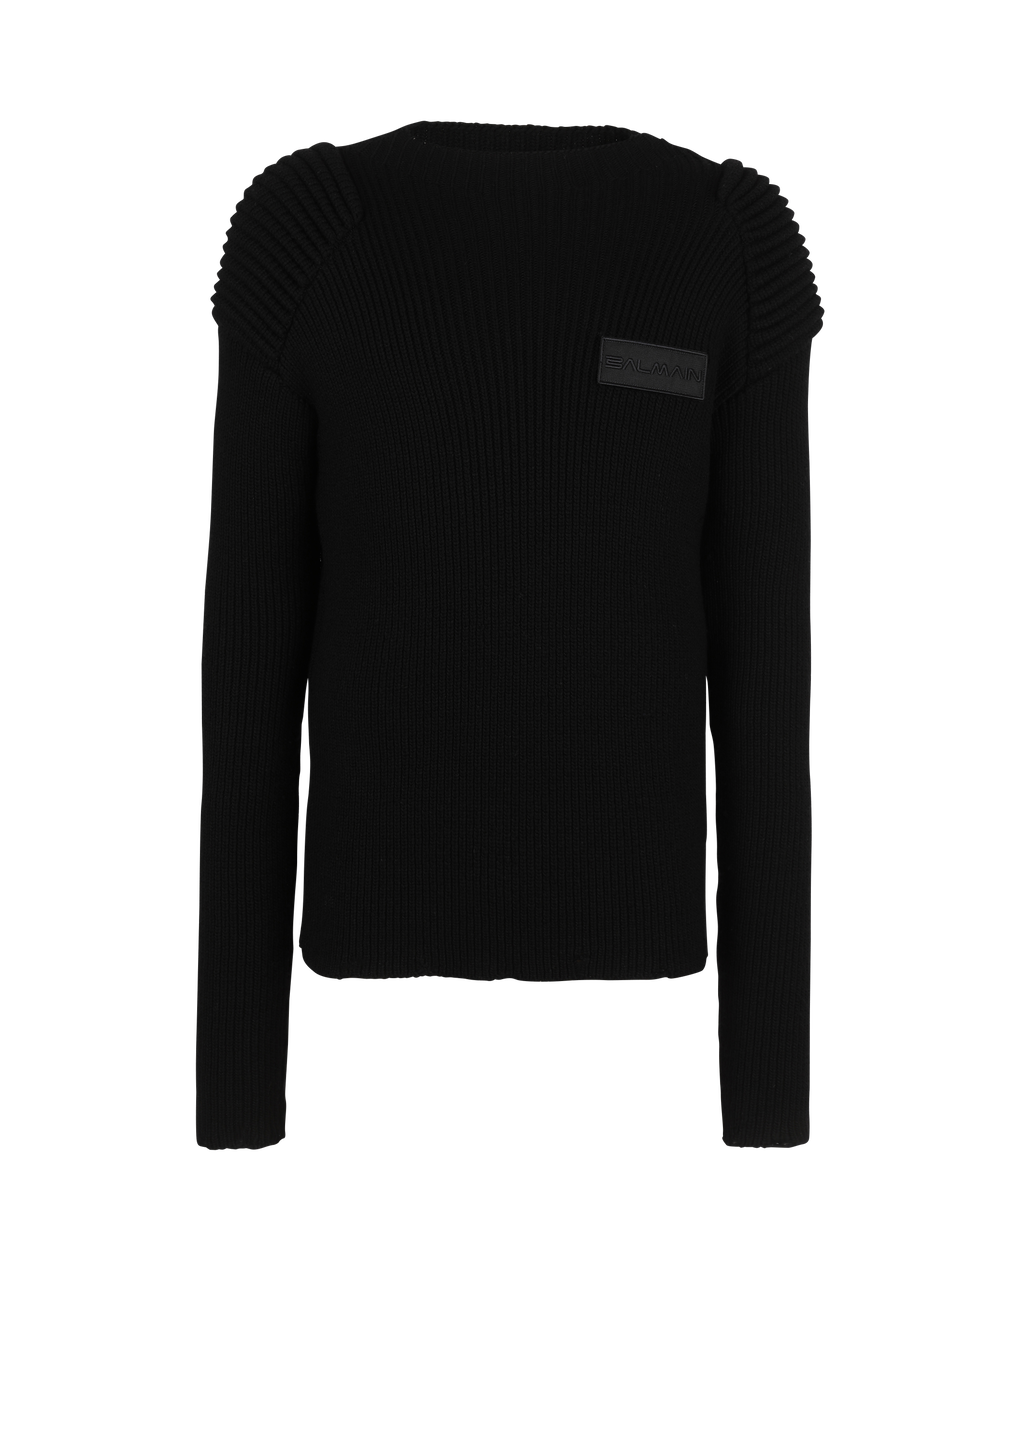 Wool jumper with Balmain logo, black, hi-res